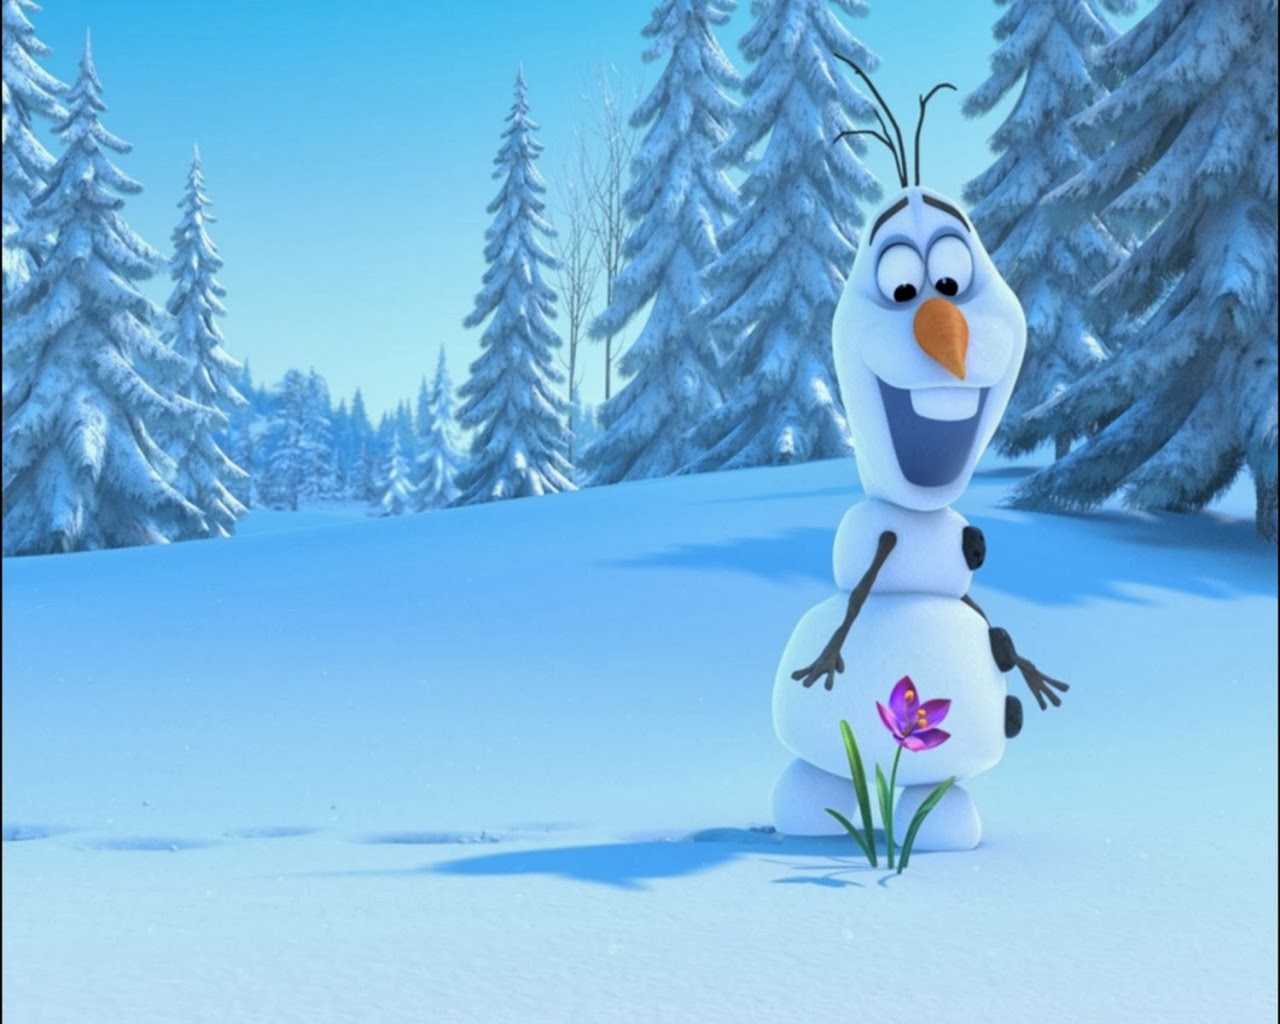 Frozen HD Wallpapers - Disnep 3D Movie - HD Wallpapers Blog